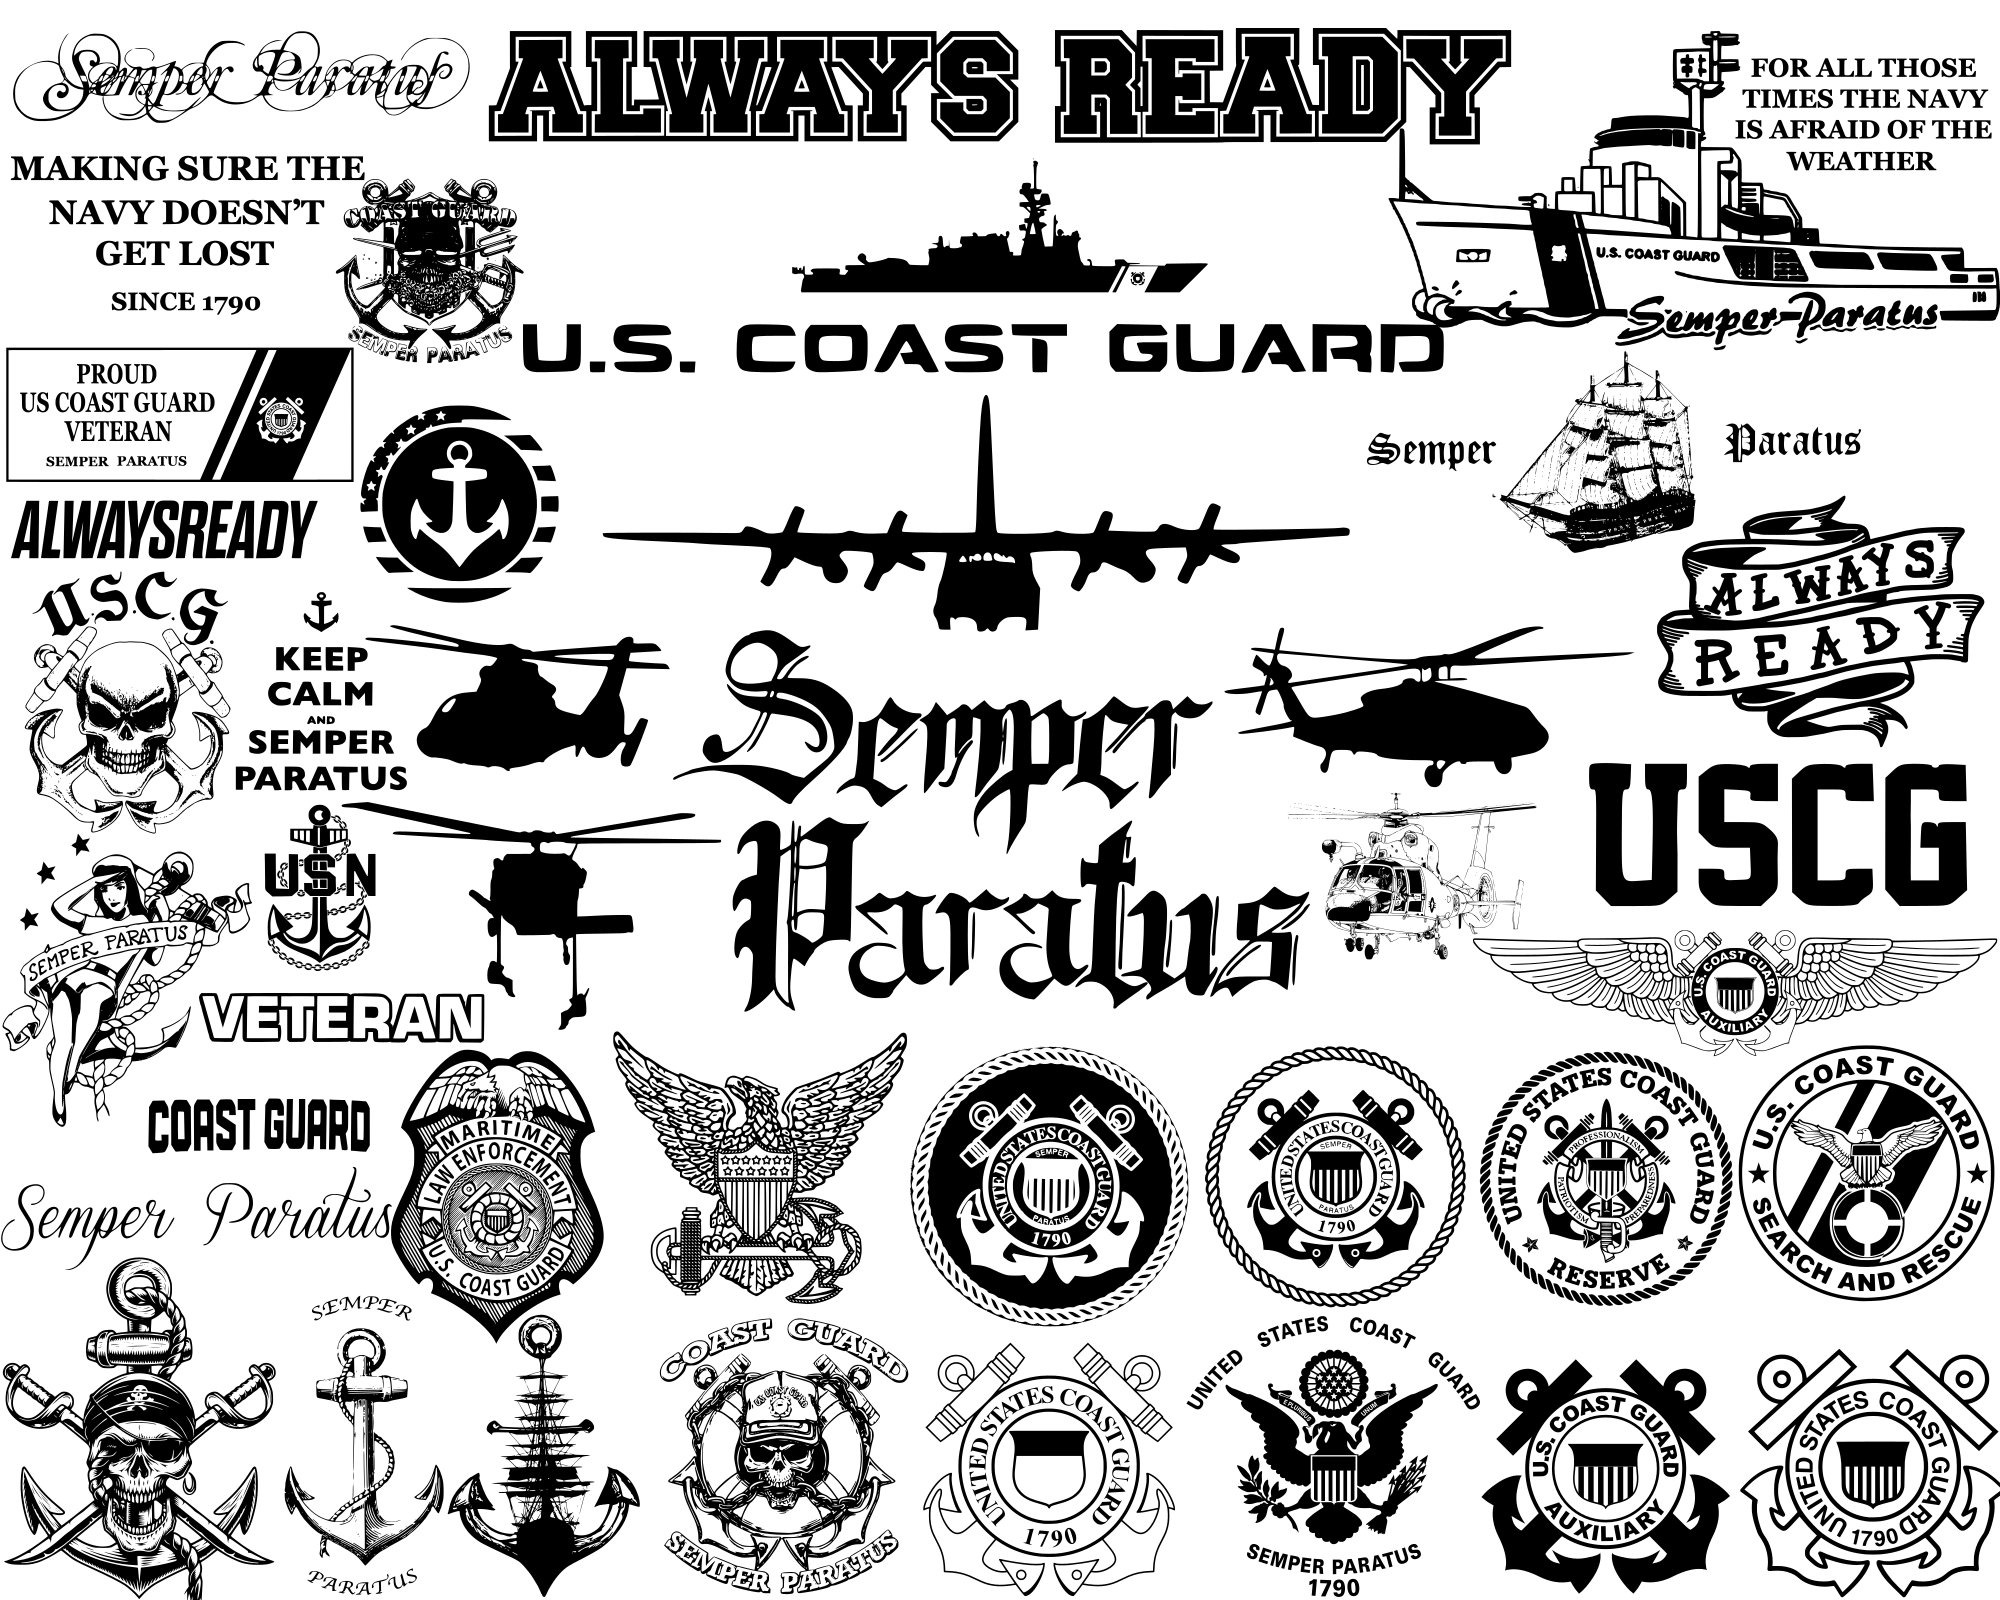 2. US Coast Guard Semper Paratus Tattoo - wide 7